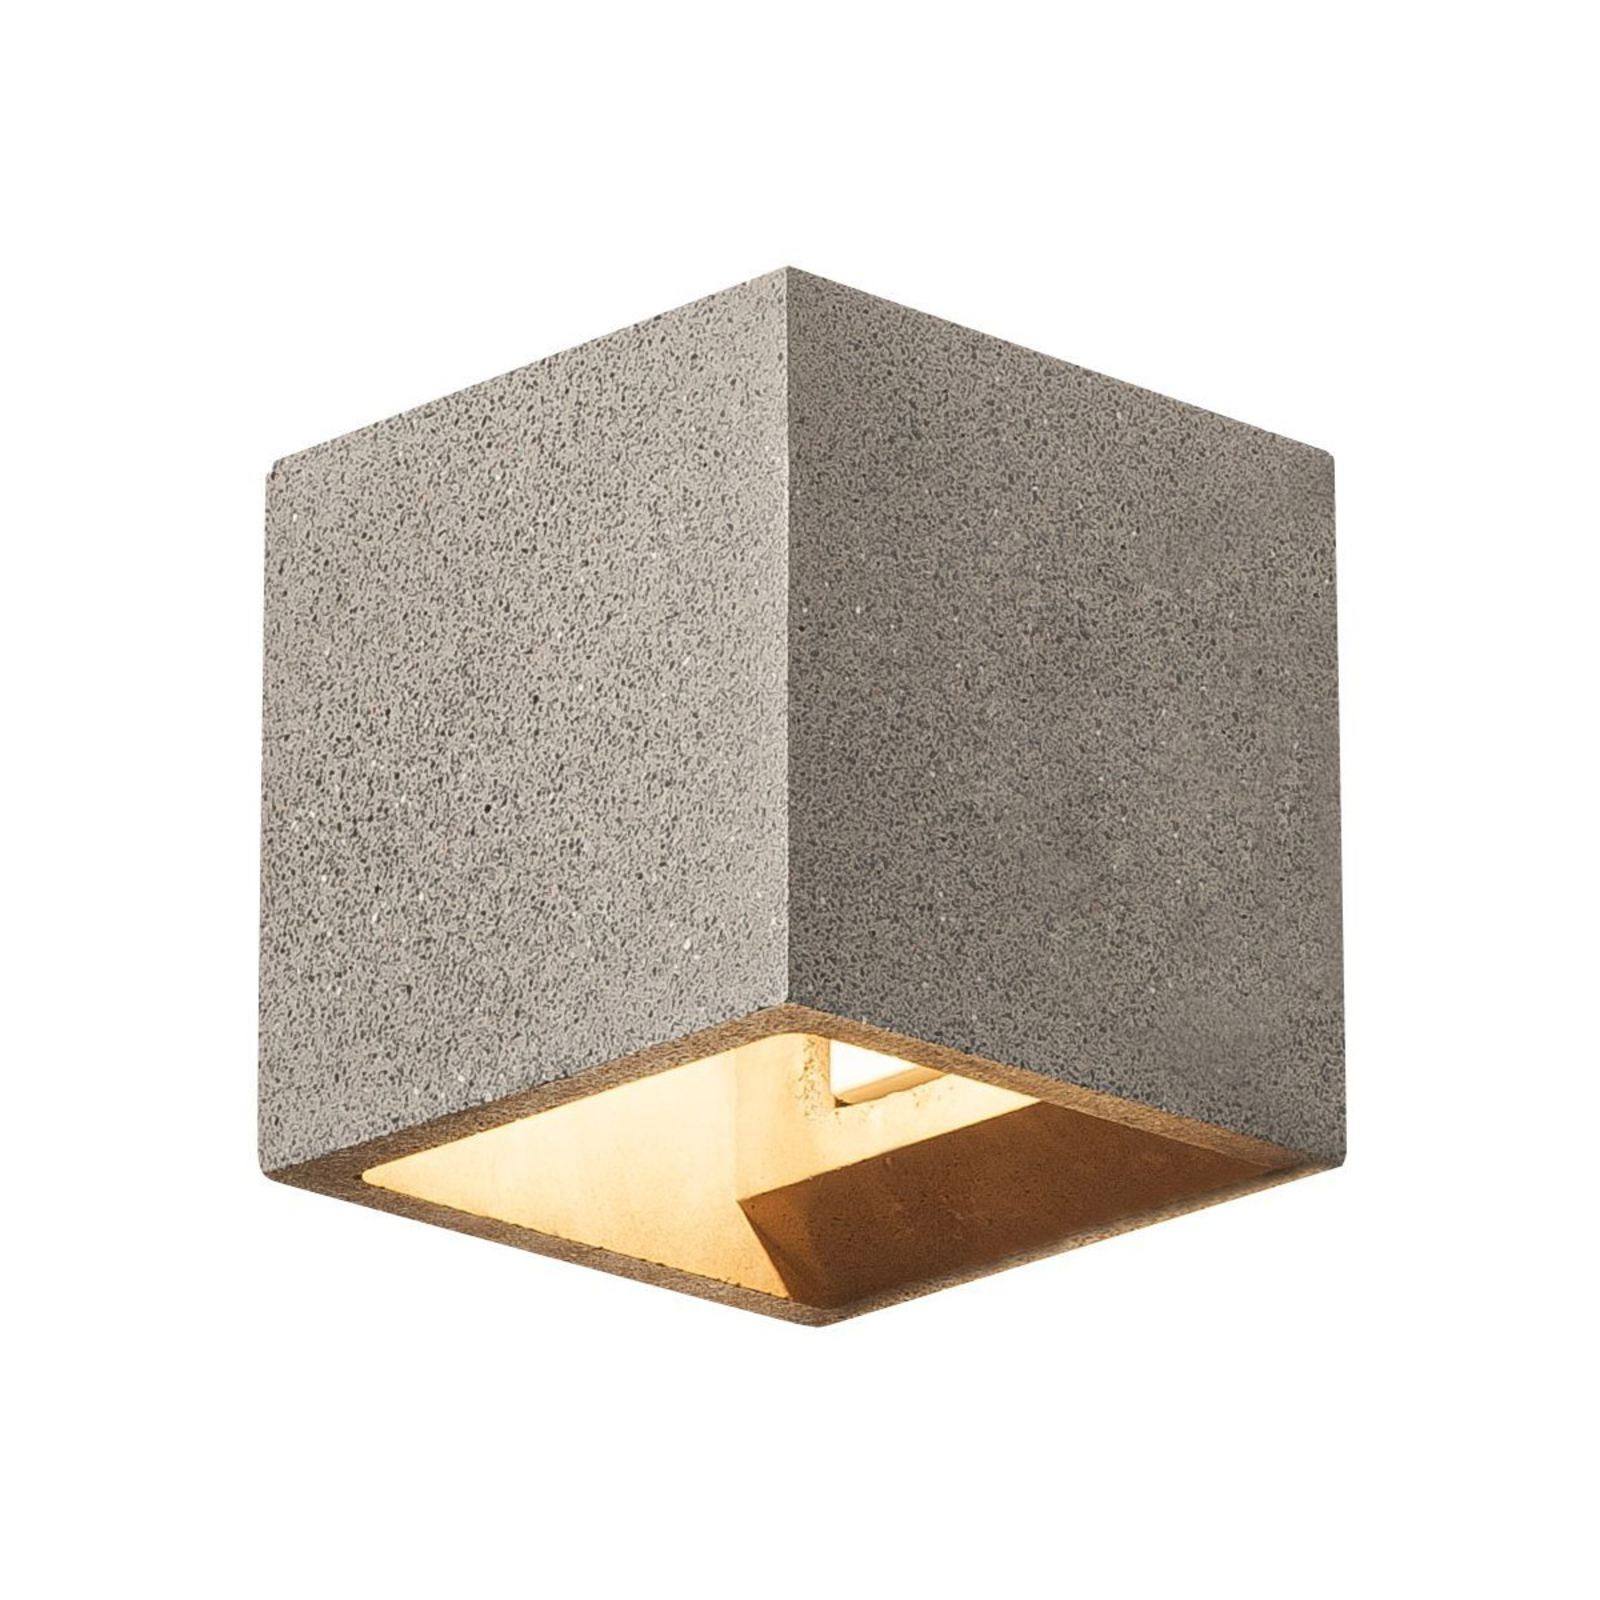 Elasticiteit Chemicaliën passagier SLV Solid Cube beton-wandlamp, zandsteenoptiek | Lampen24.be